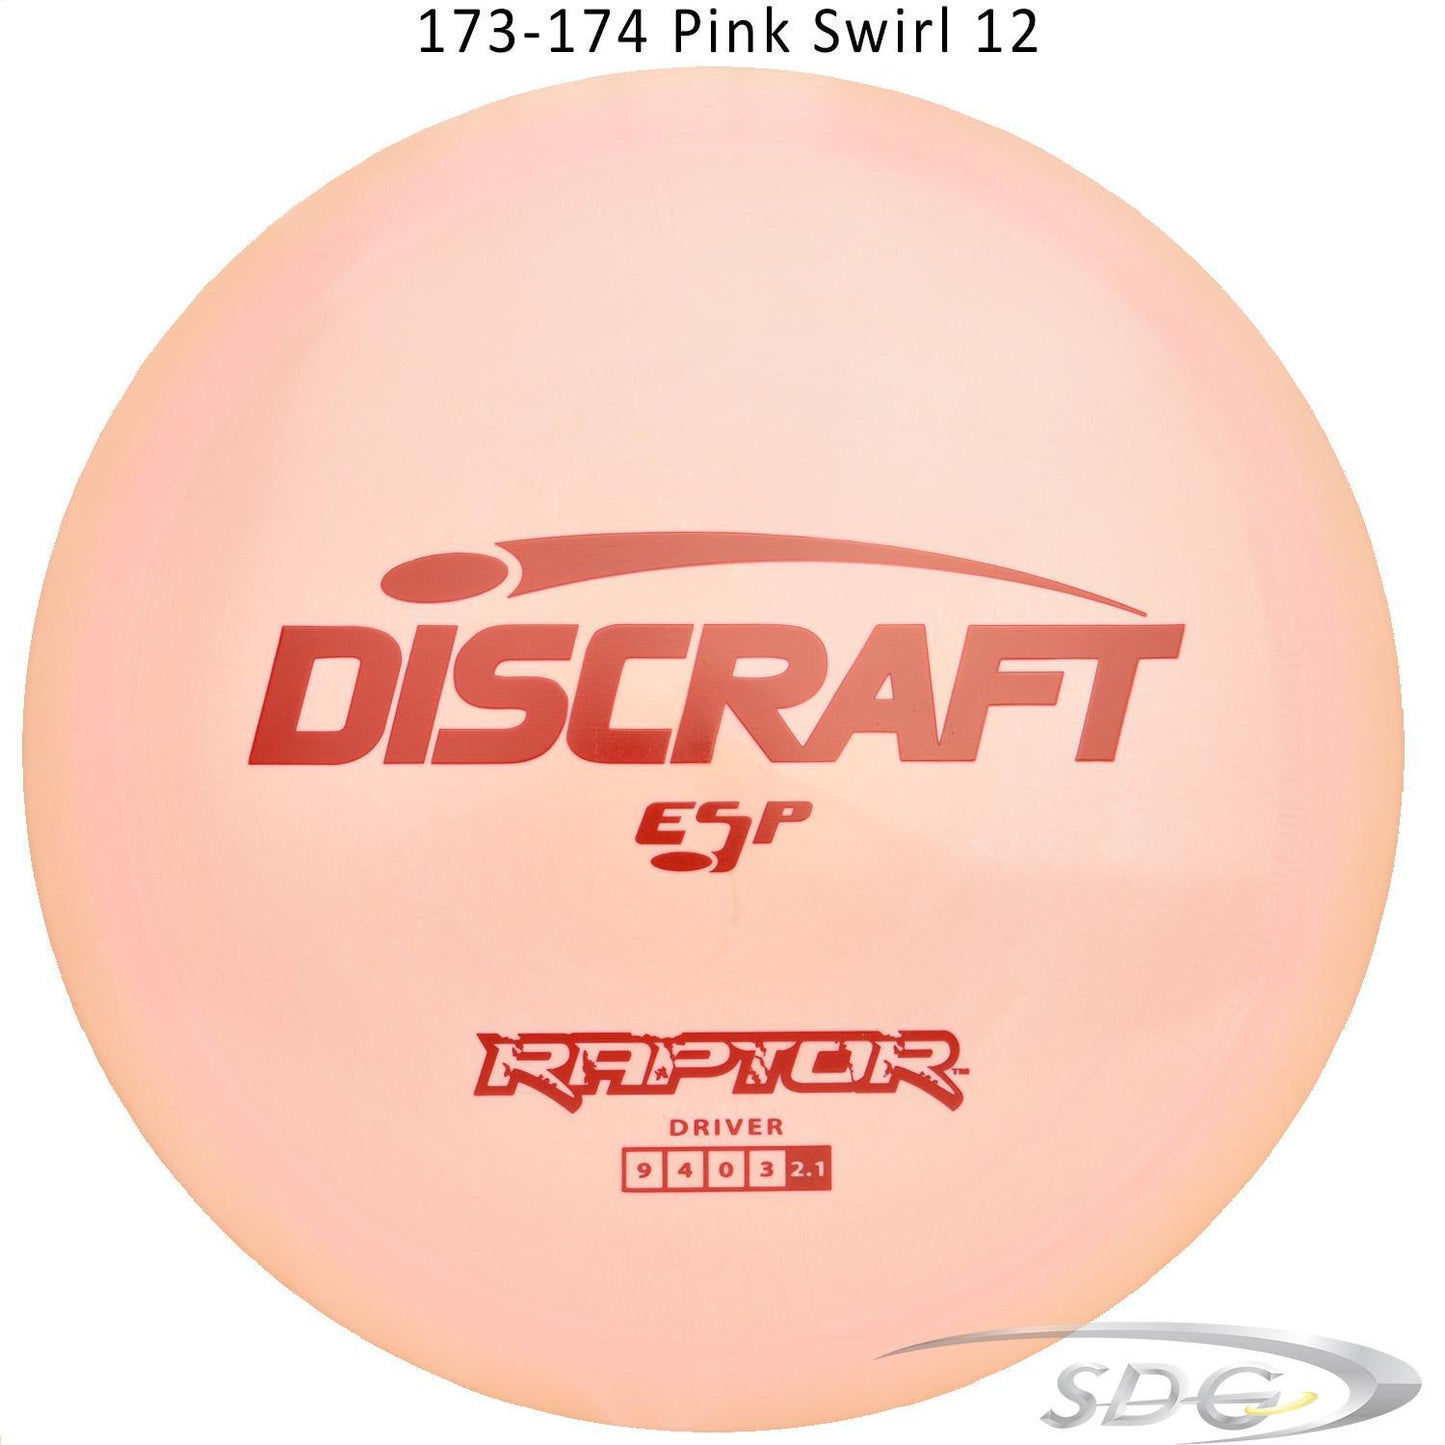 discraft-esp-raptor-disc-golf-distance-driver 173-174 Pink Swirl 12 